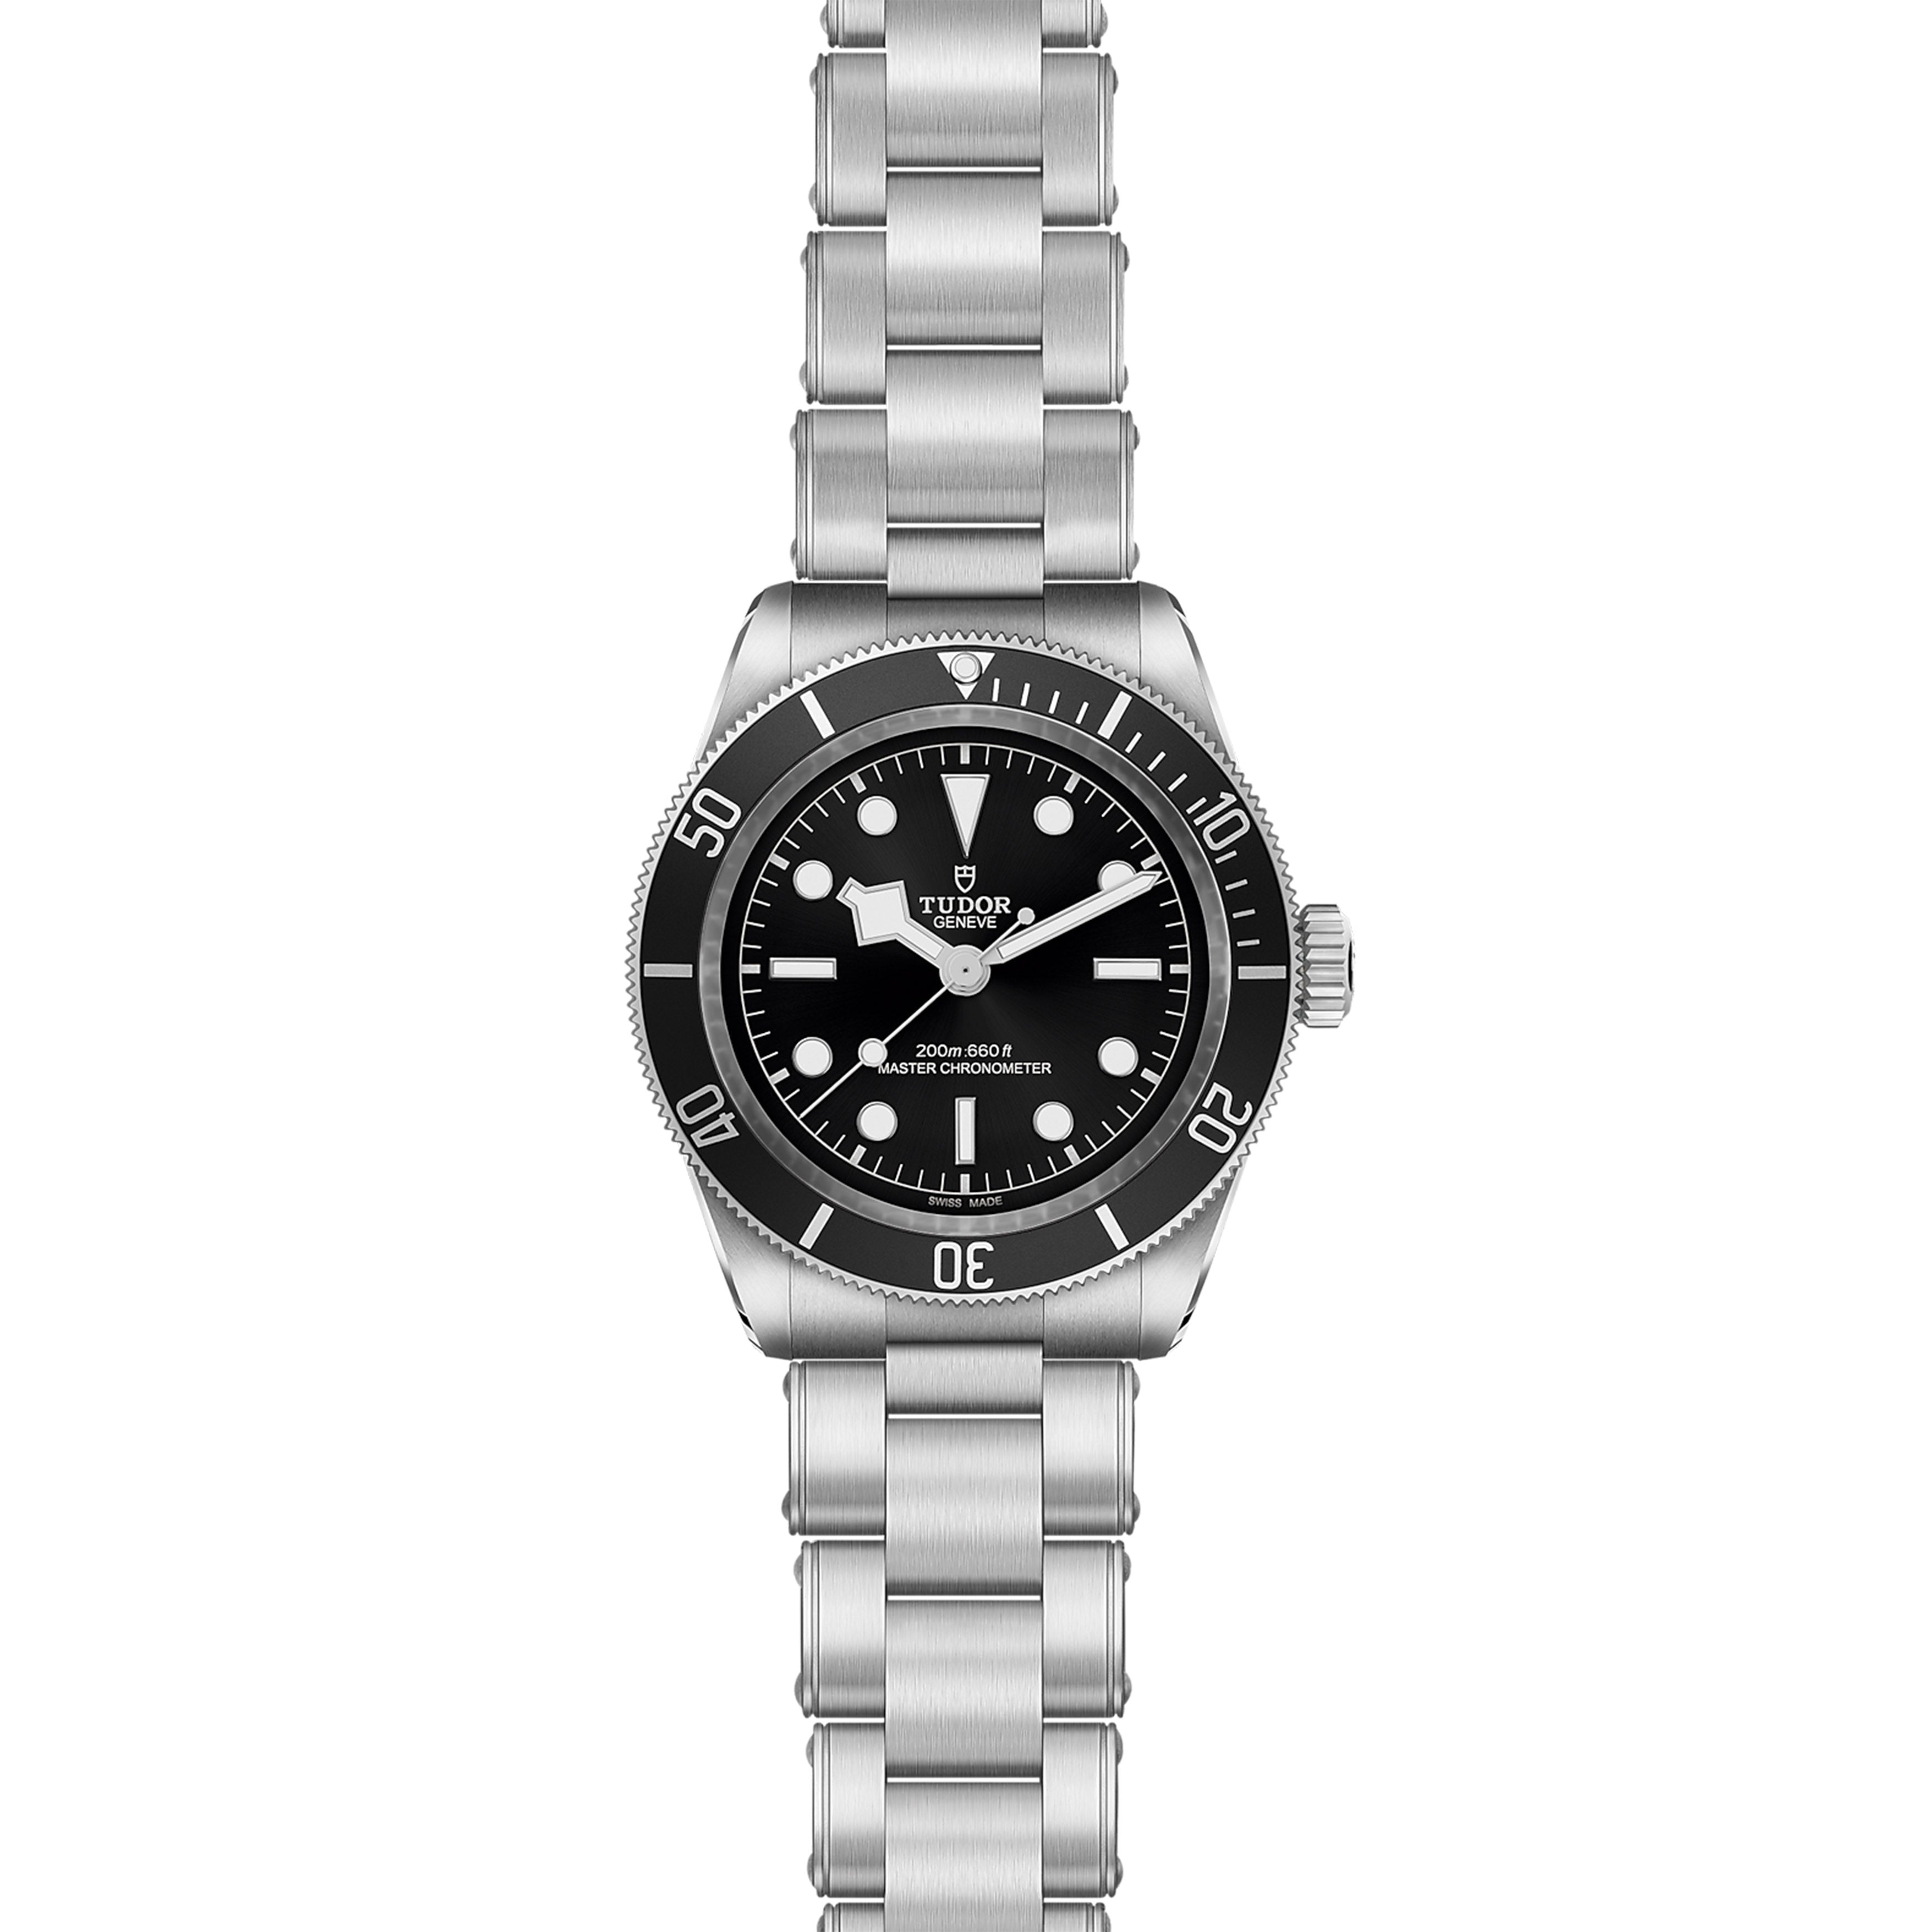 Tudor Black Bay Monochrome Watch, 41mm Black Dial, M7941A1A0NU-0001